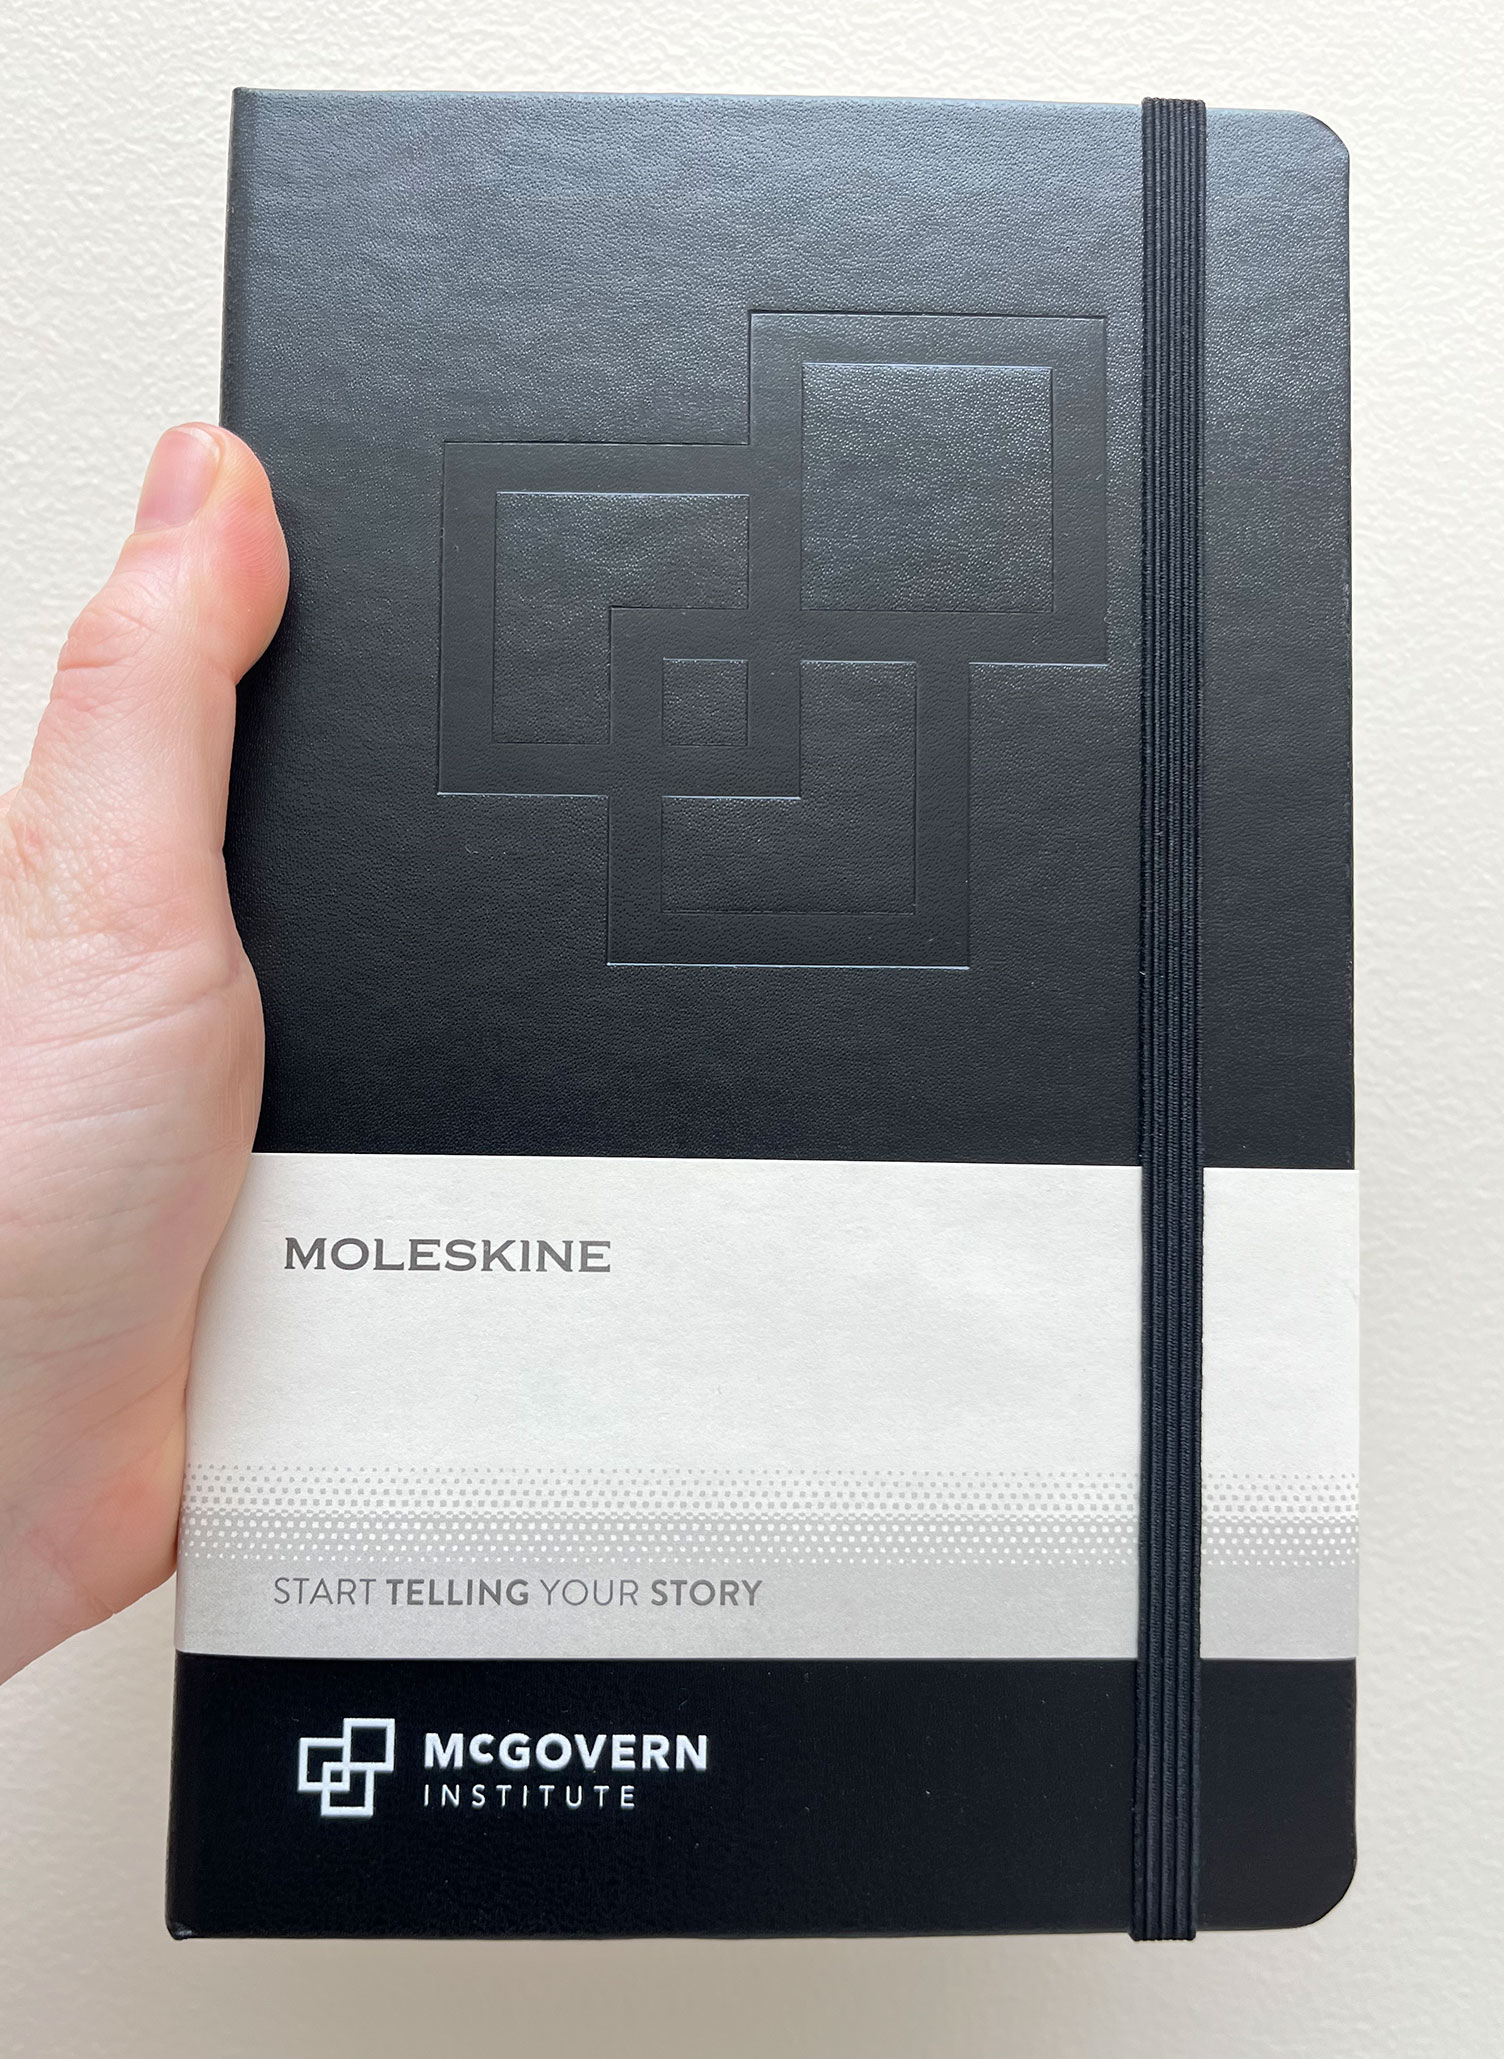 Moleskine Notebook and Pen